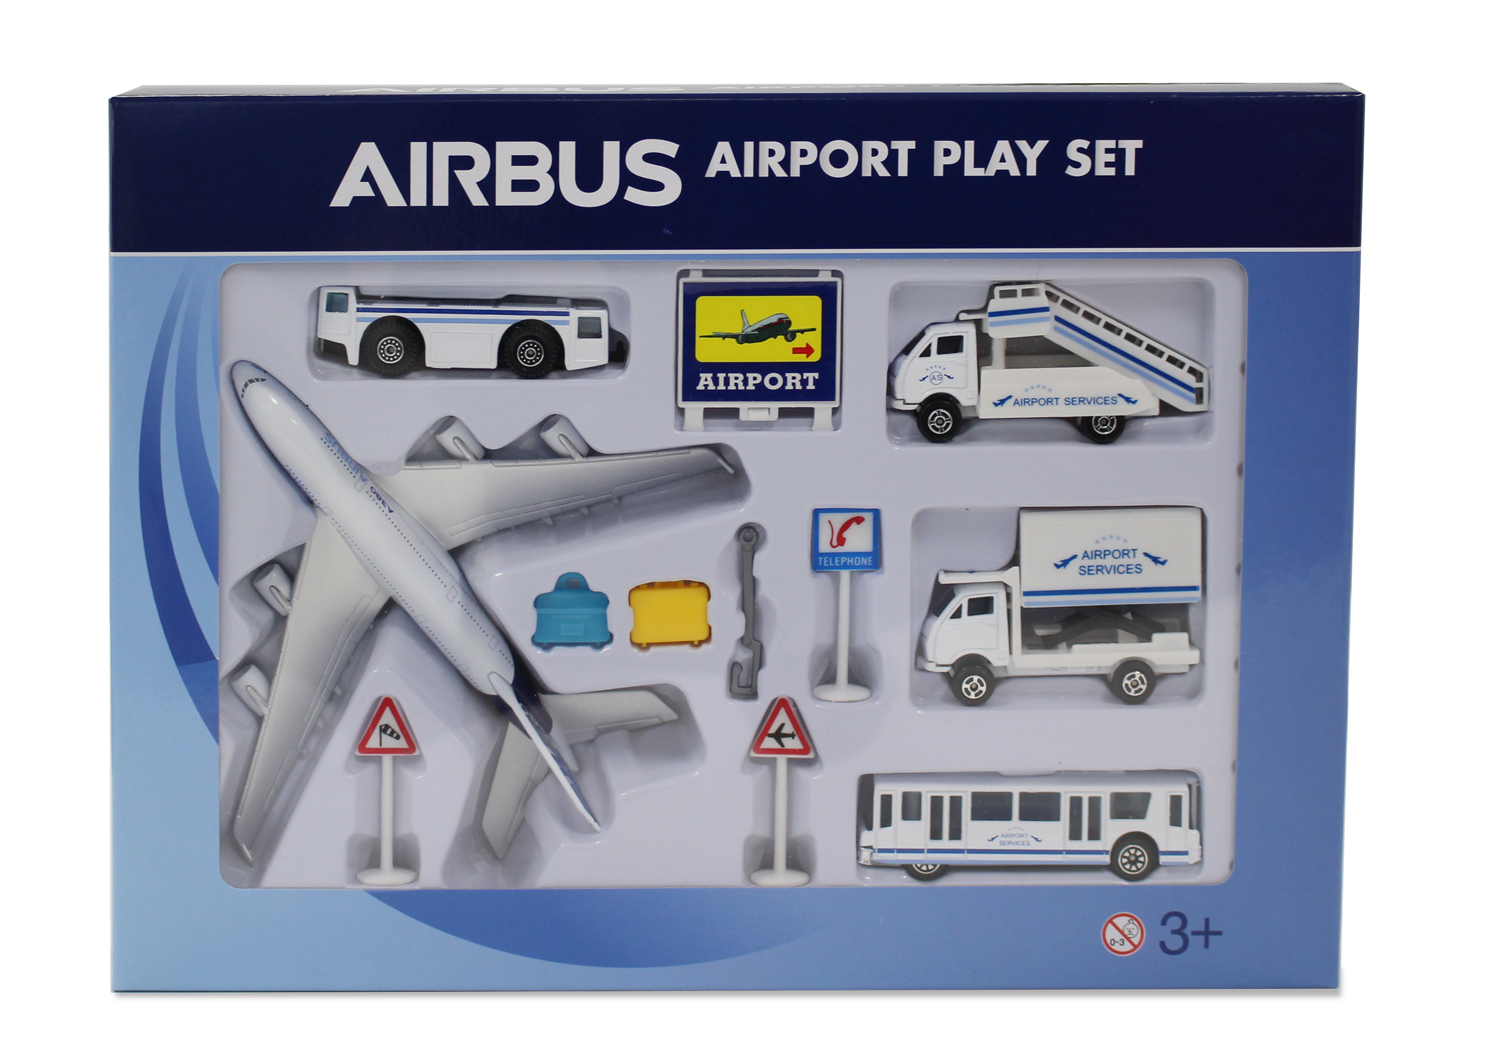 Airport Play Set Airbus